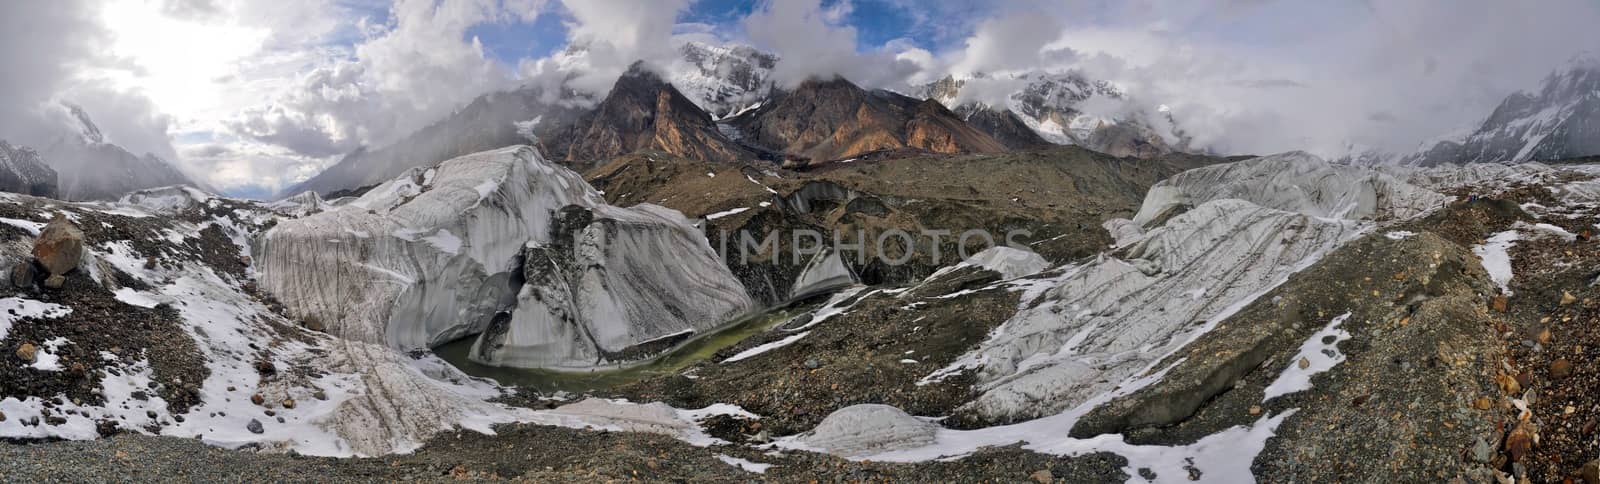 Engilchek glacier panorama by MichalKnitl